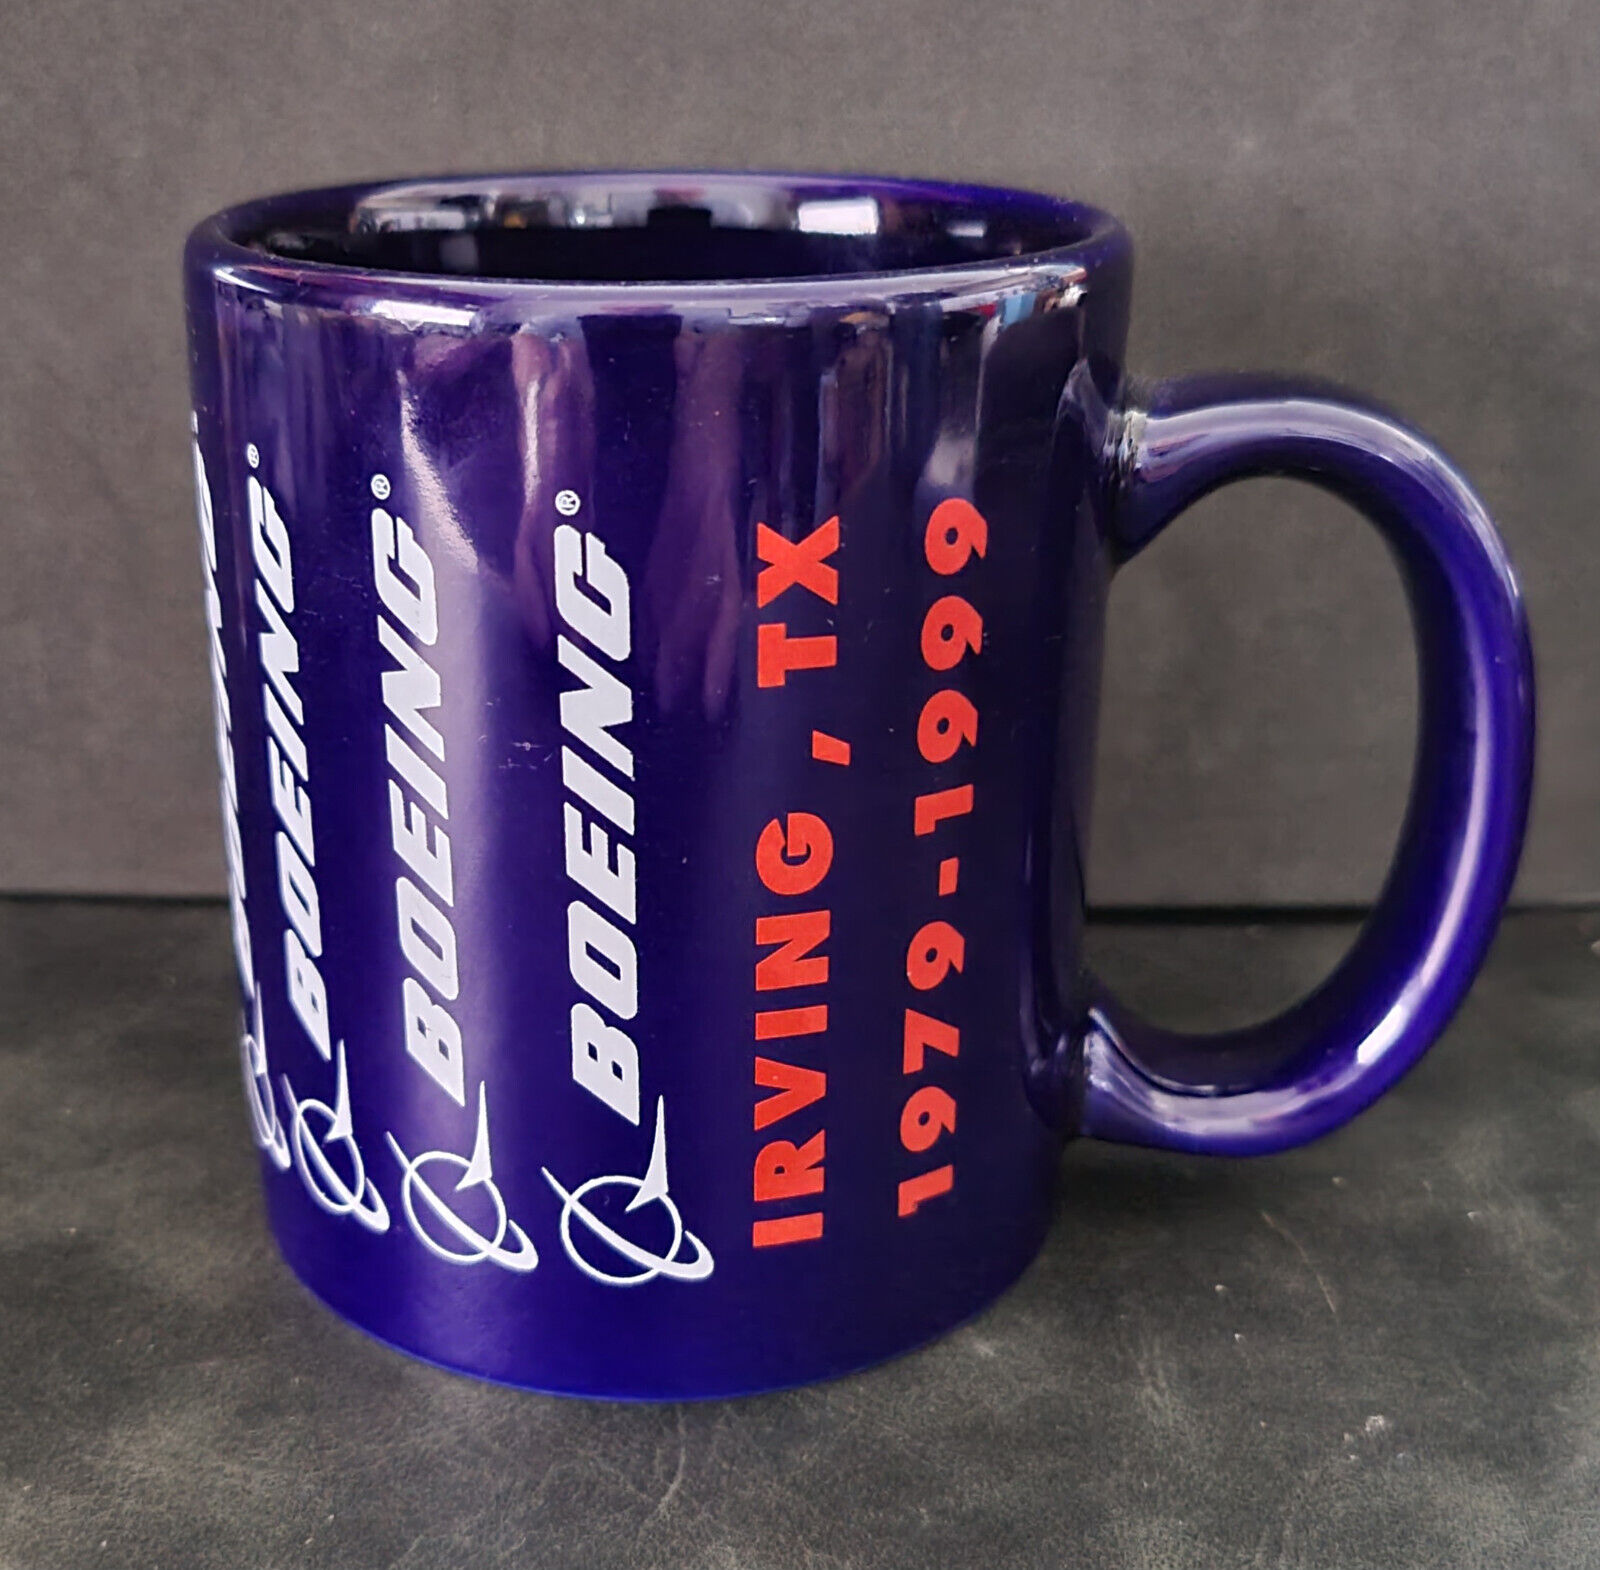 Vintage Boeing Coffee Mug Irving, TX 1979 - 1999 Cup Mug Blue Ceramic